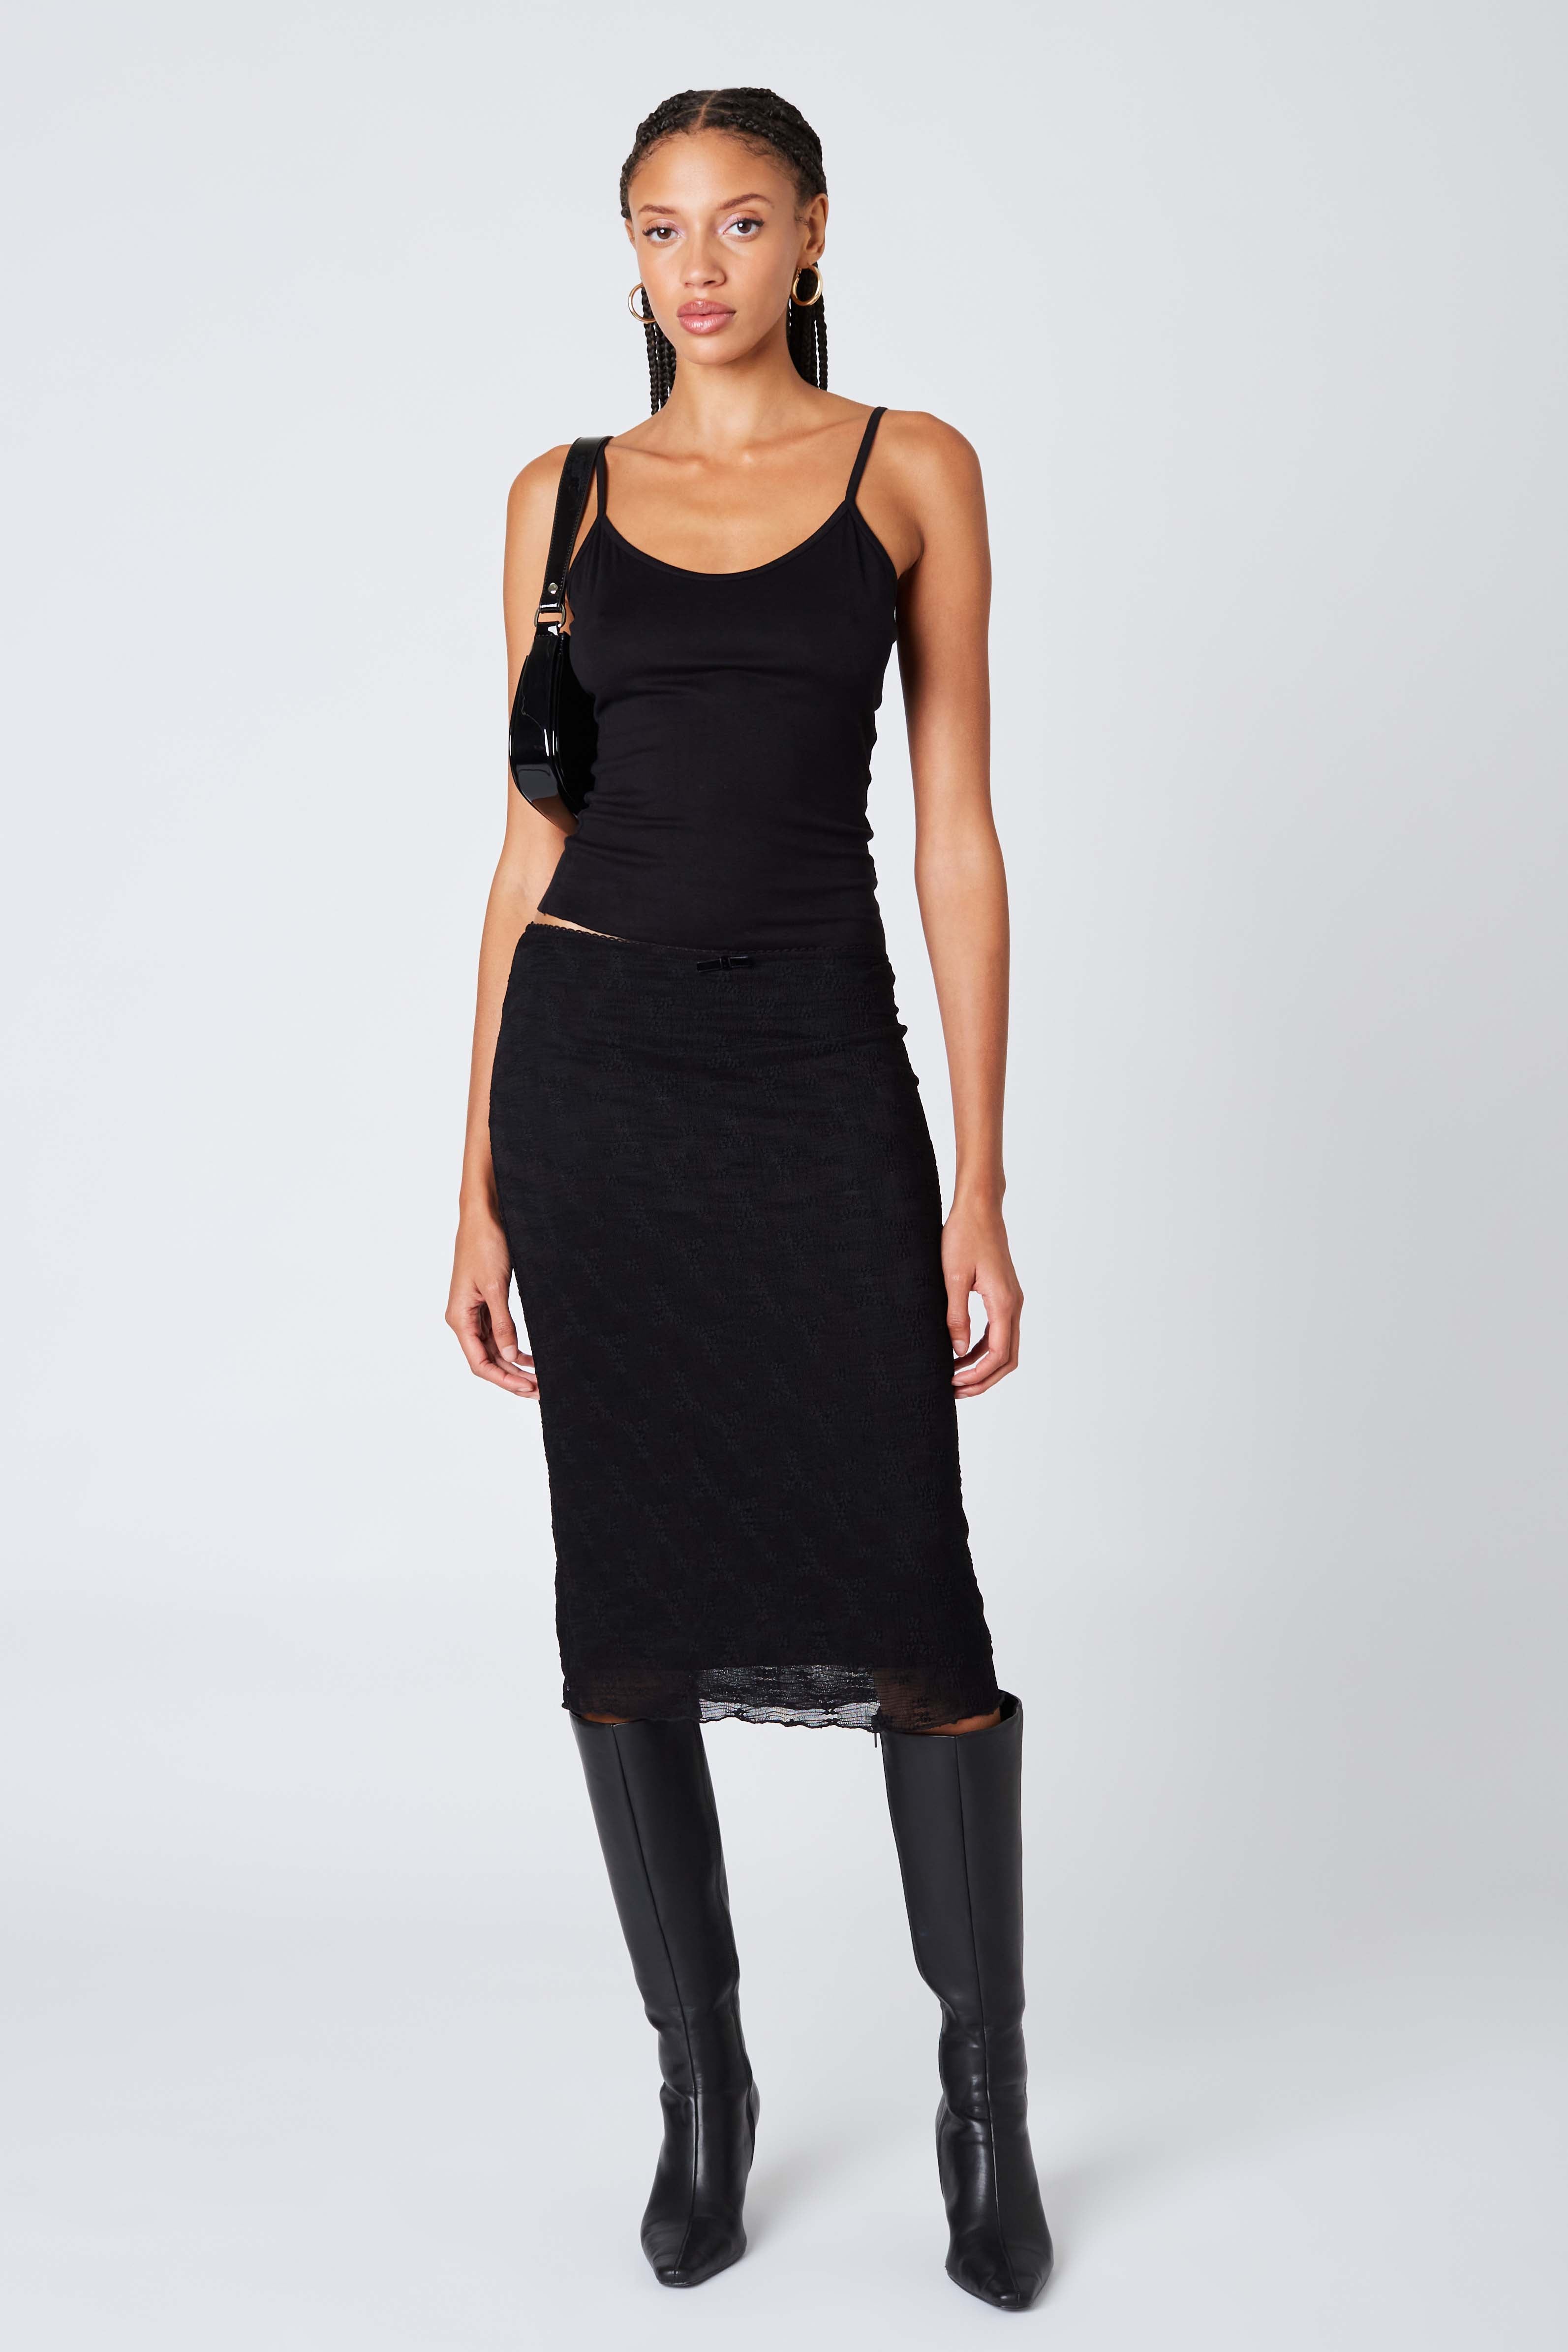 Sheer Midi Skirt in Black Front View